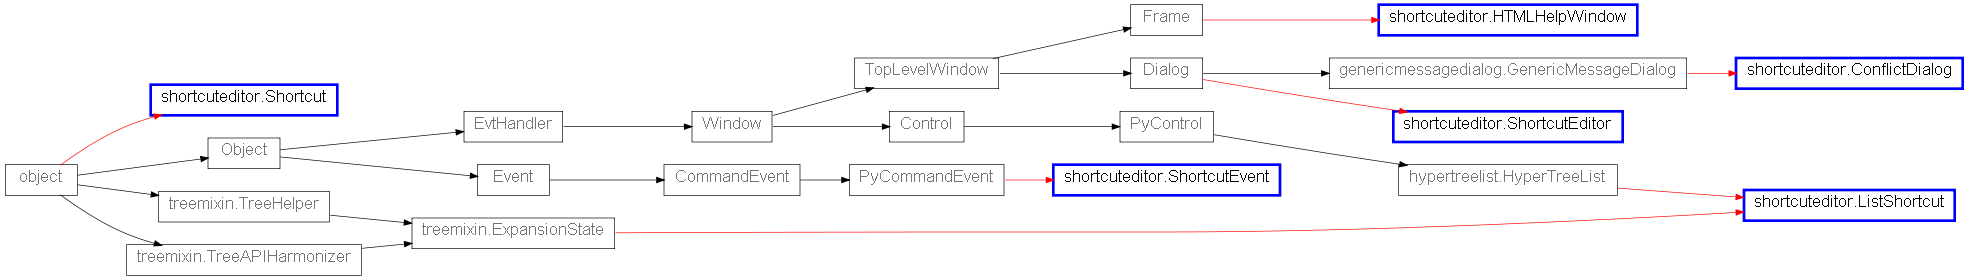 Inheritance diagram of shortcuteditor